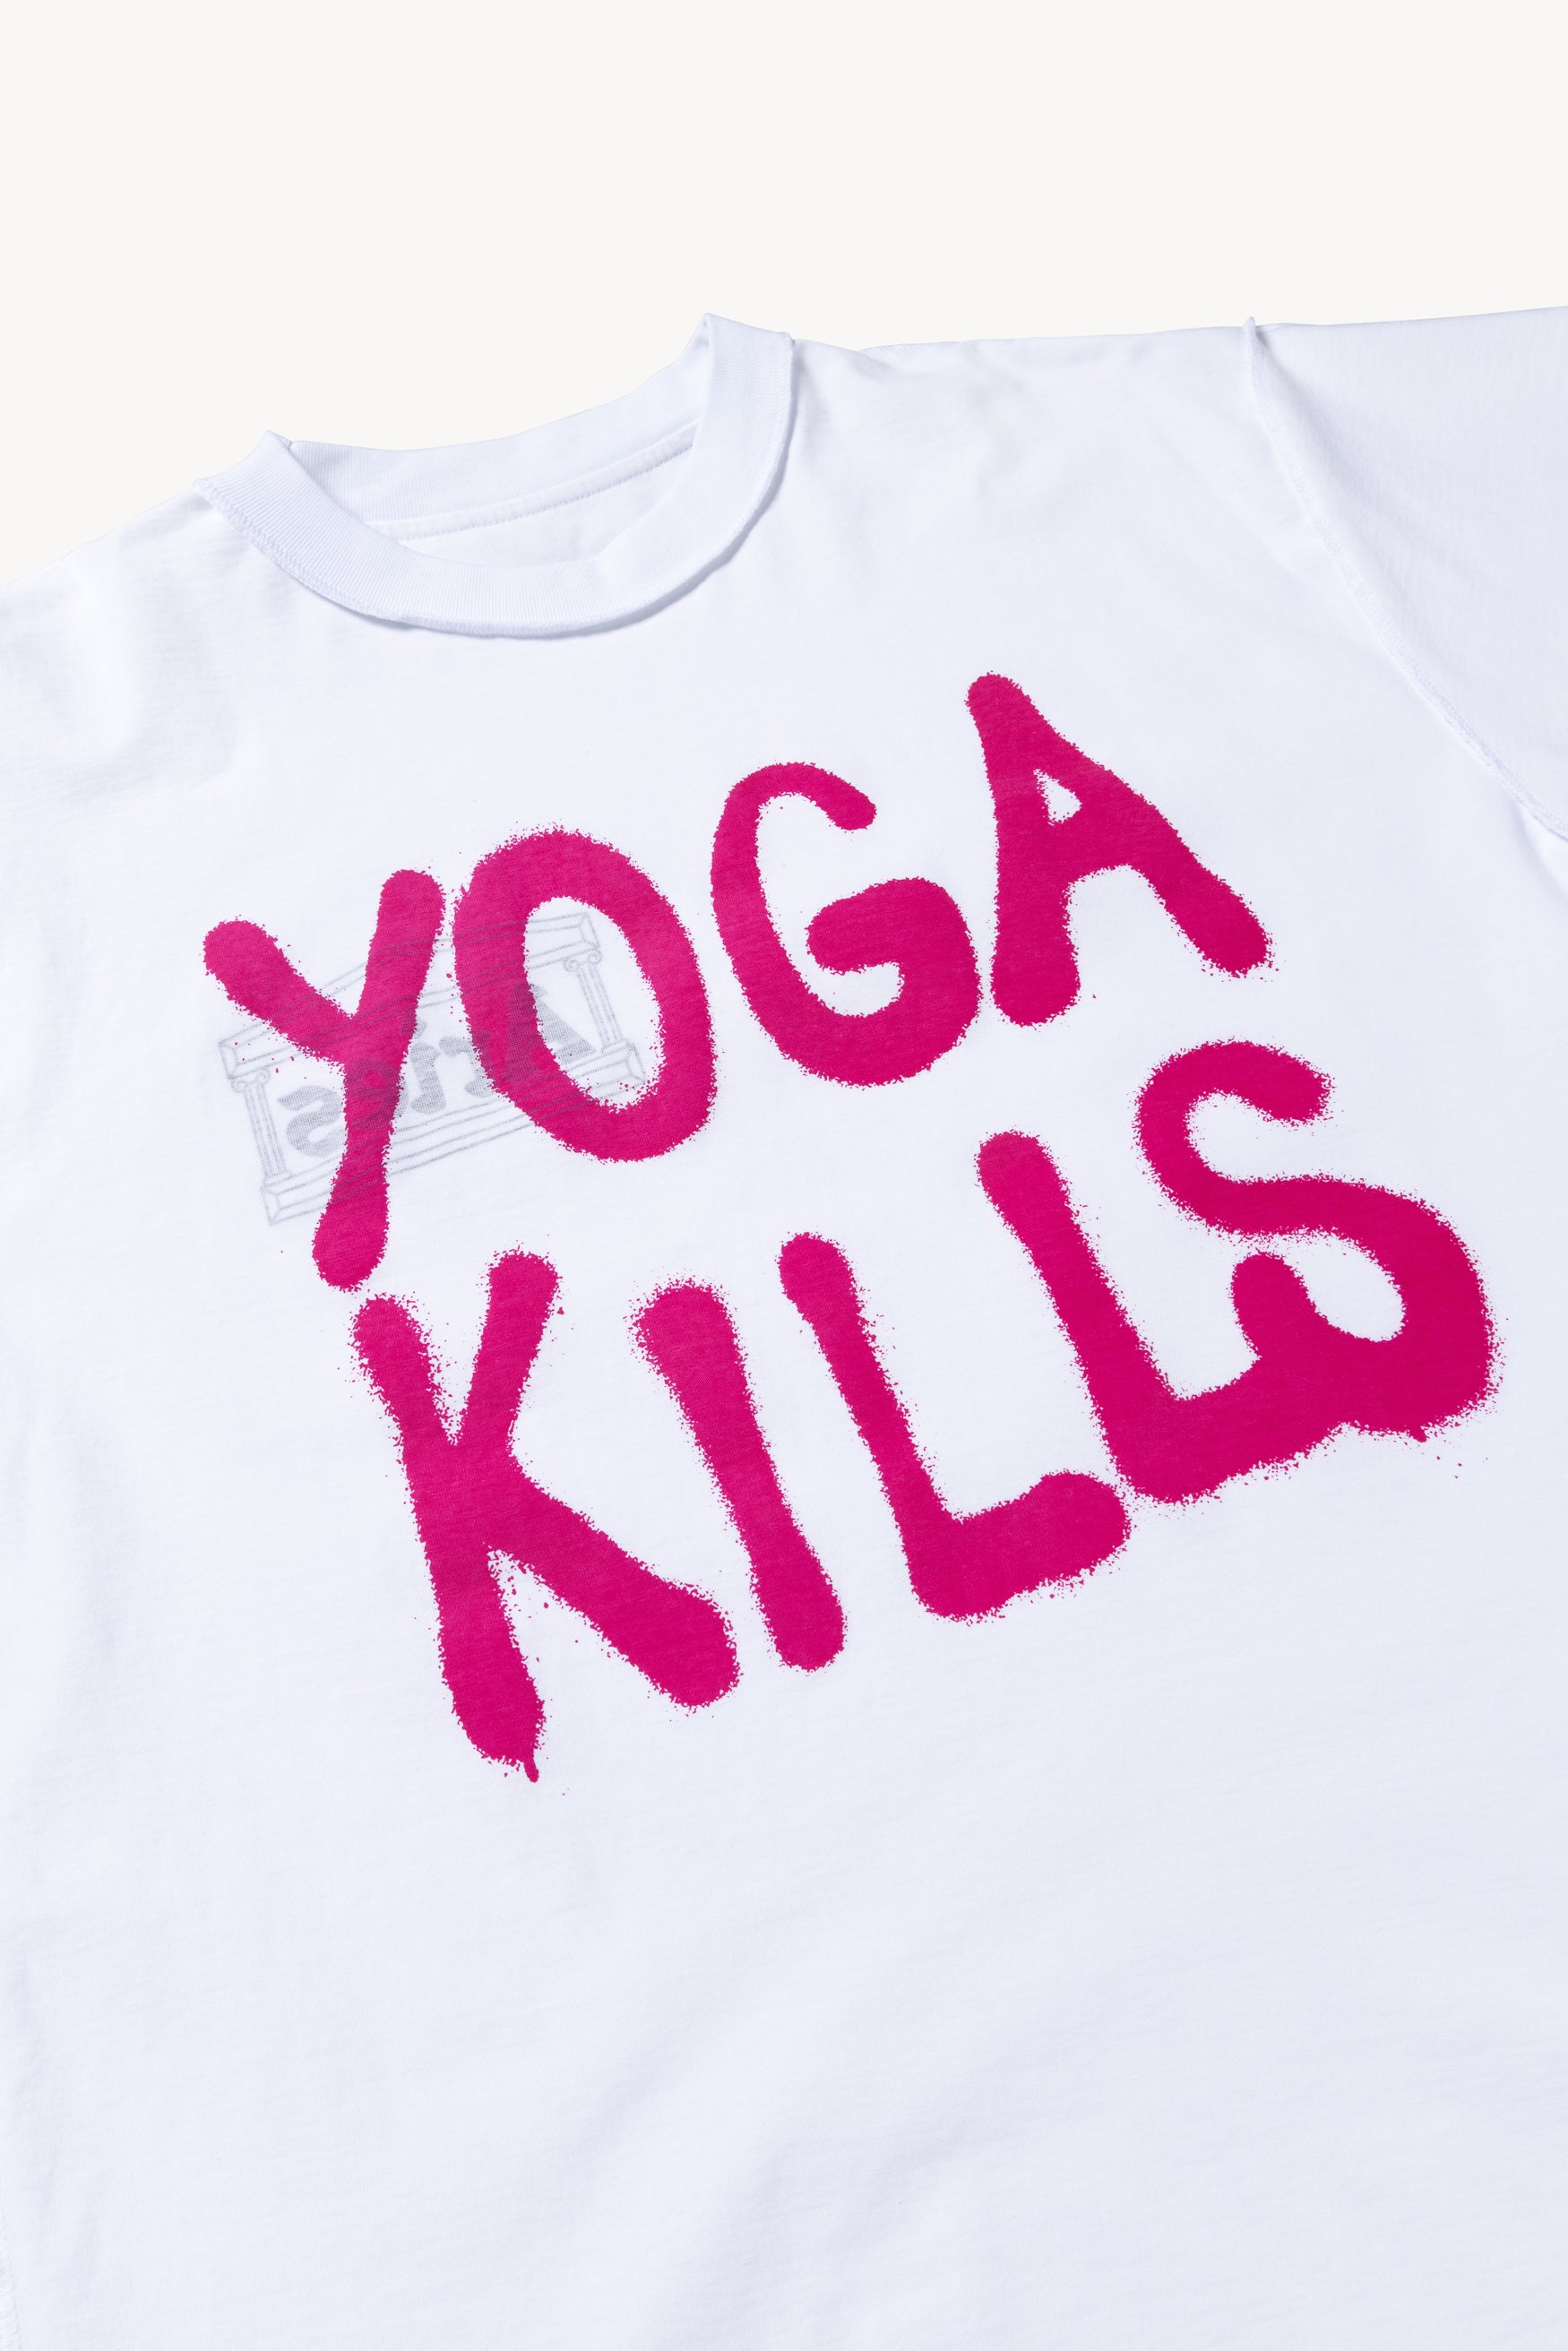 Load image into Gallery viewer, Yoga Kills Reversible Tee